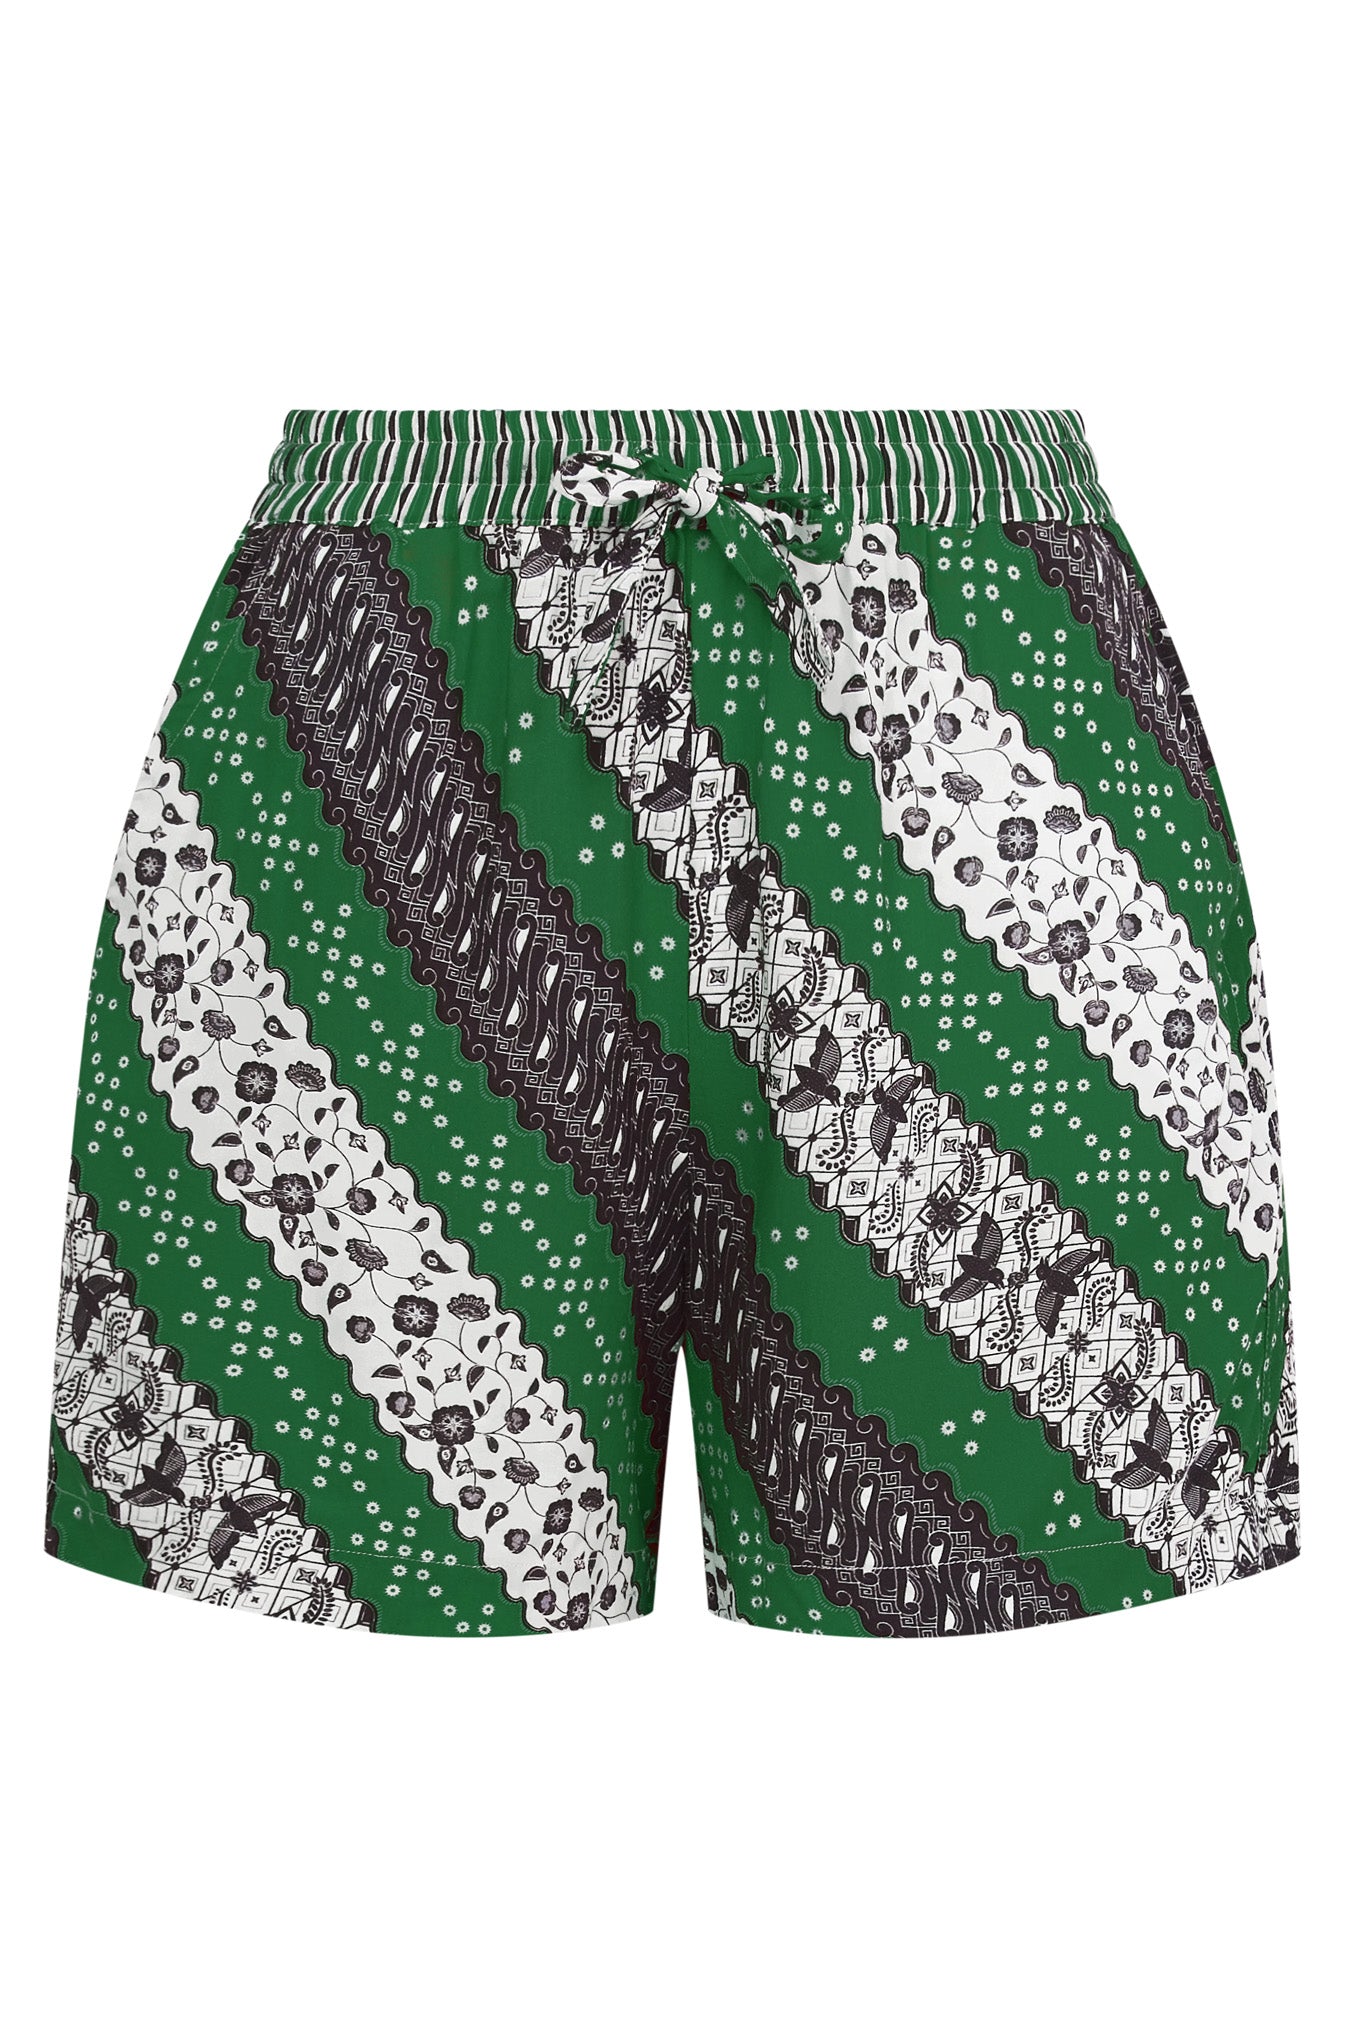 LEAH Shorts - Summer Green, SIZE 1 / UK 8 / EUR 36